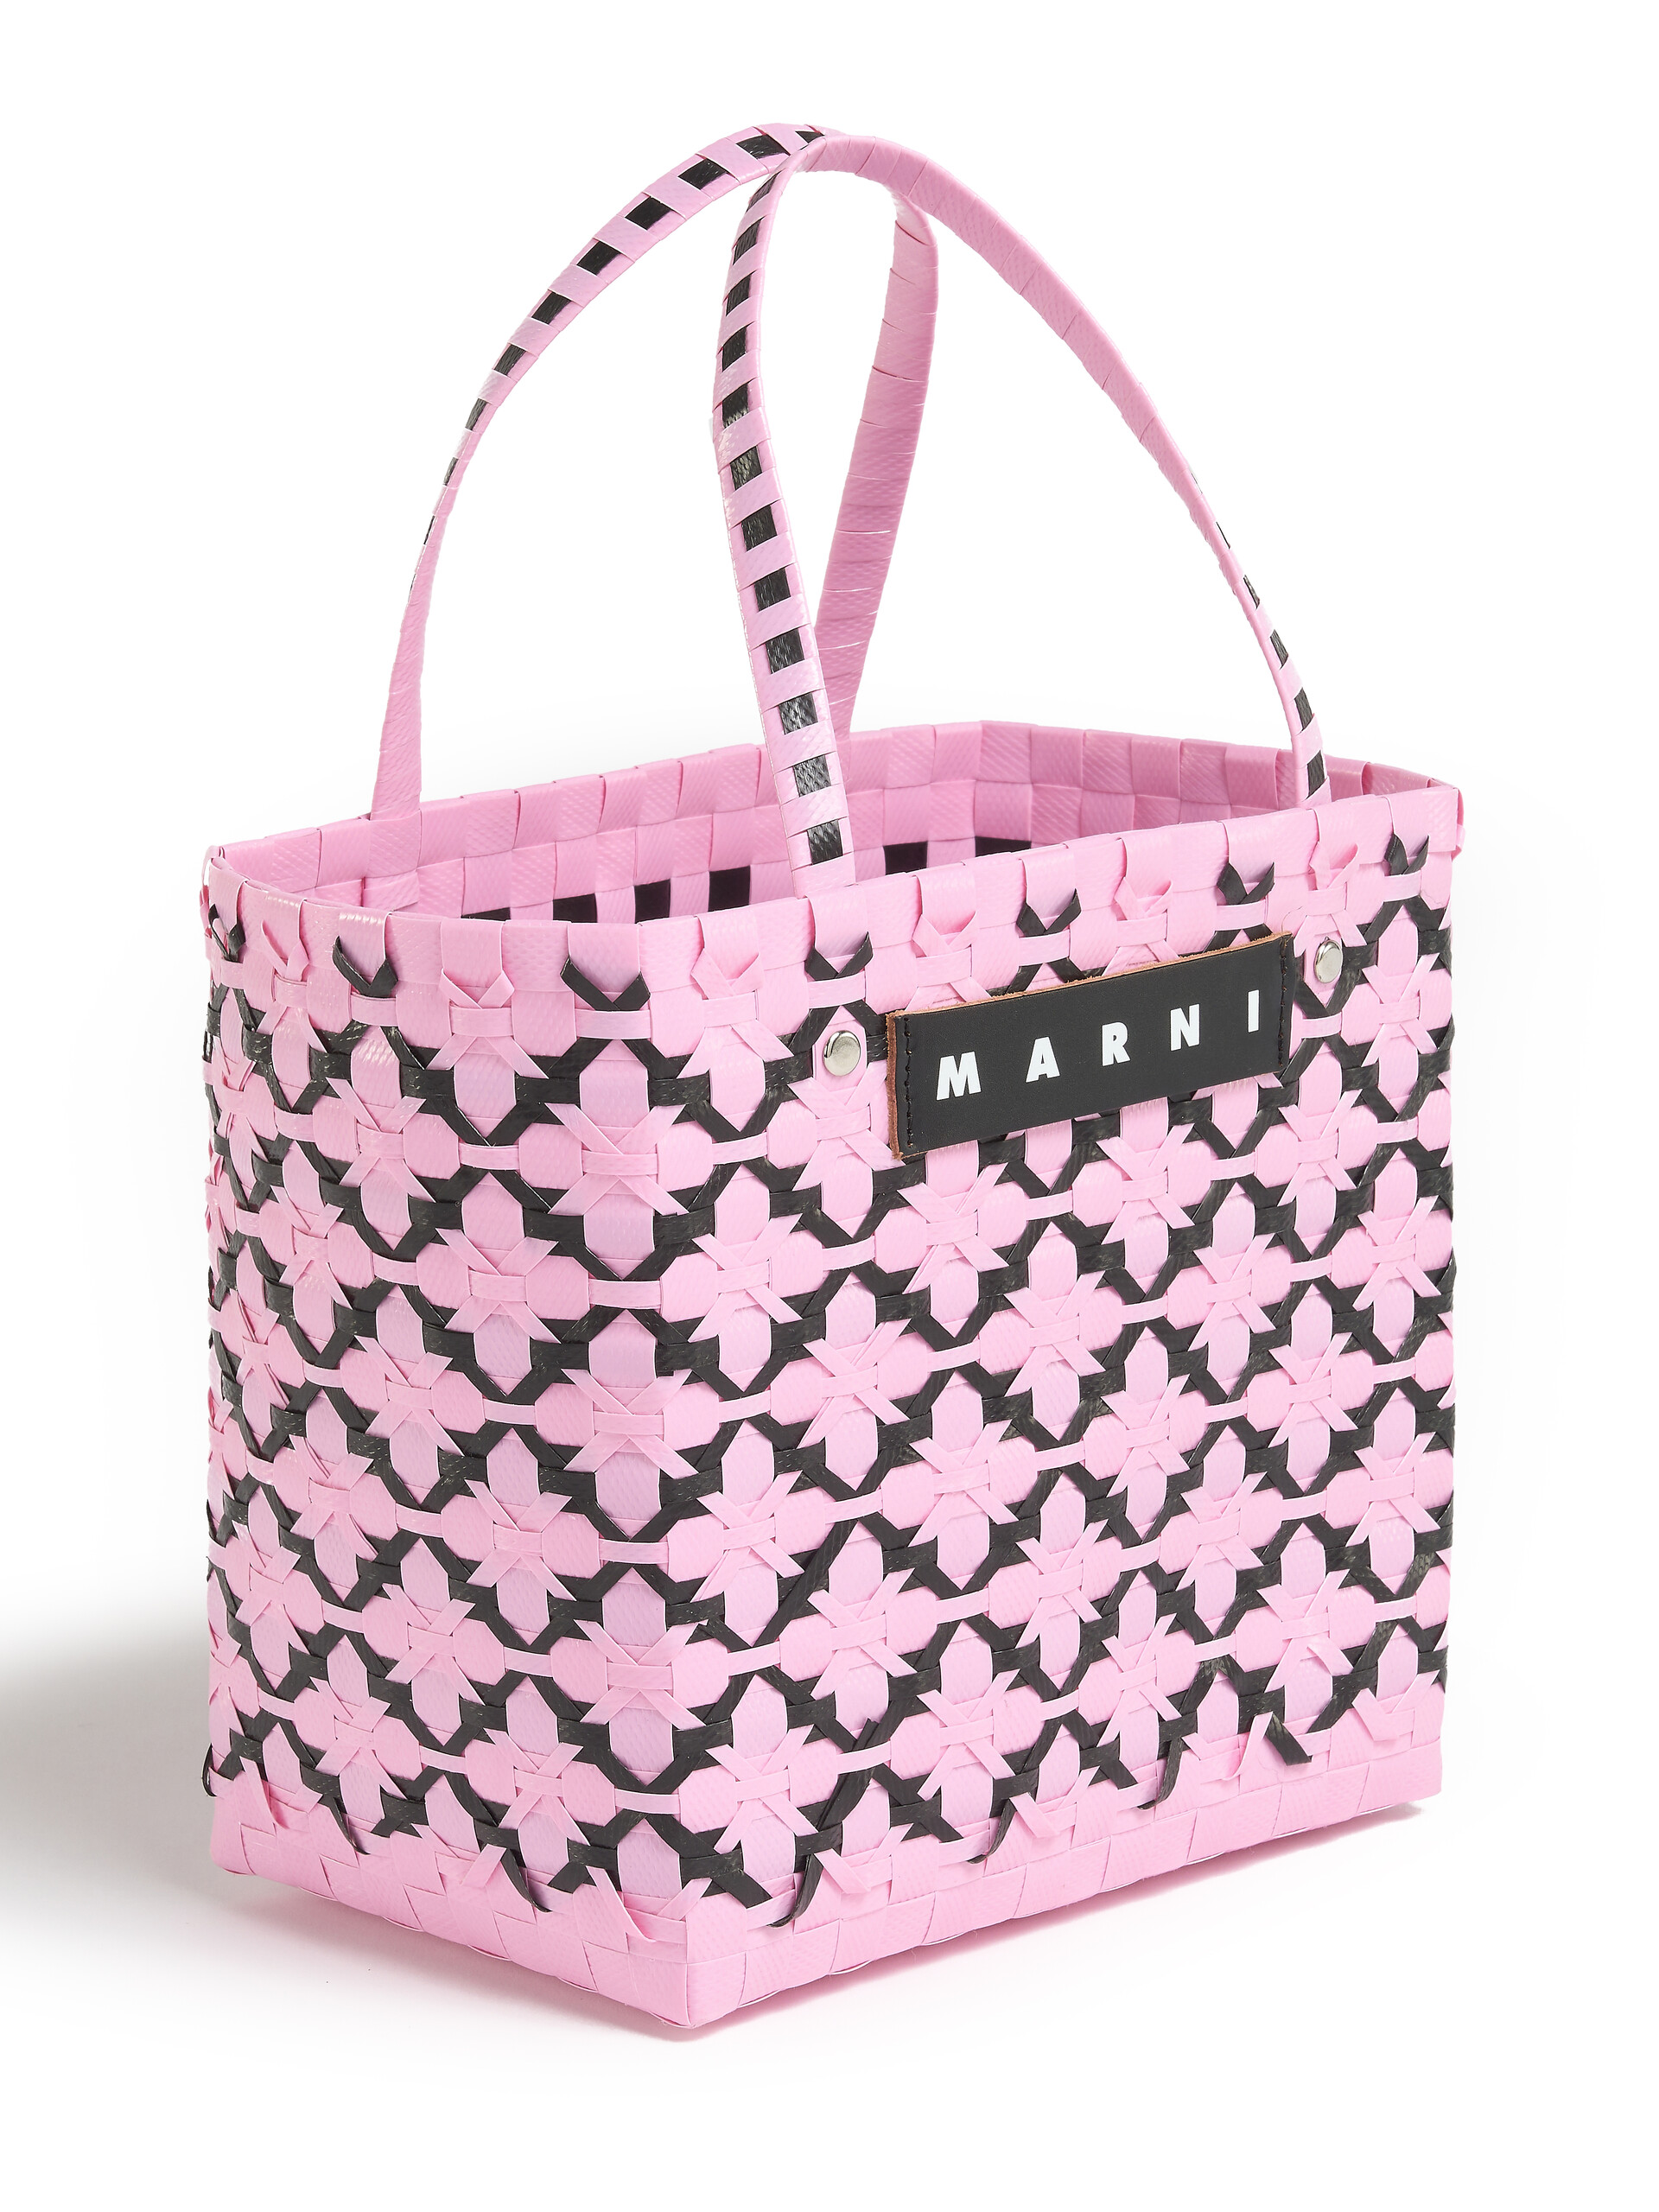 Pink and black MARNI MARKET BASKET bag - Shopping Bags - Image 4